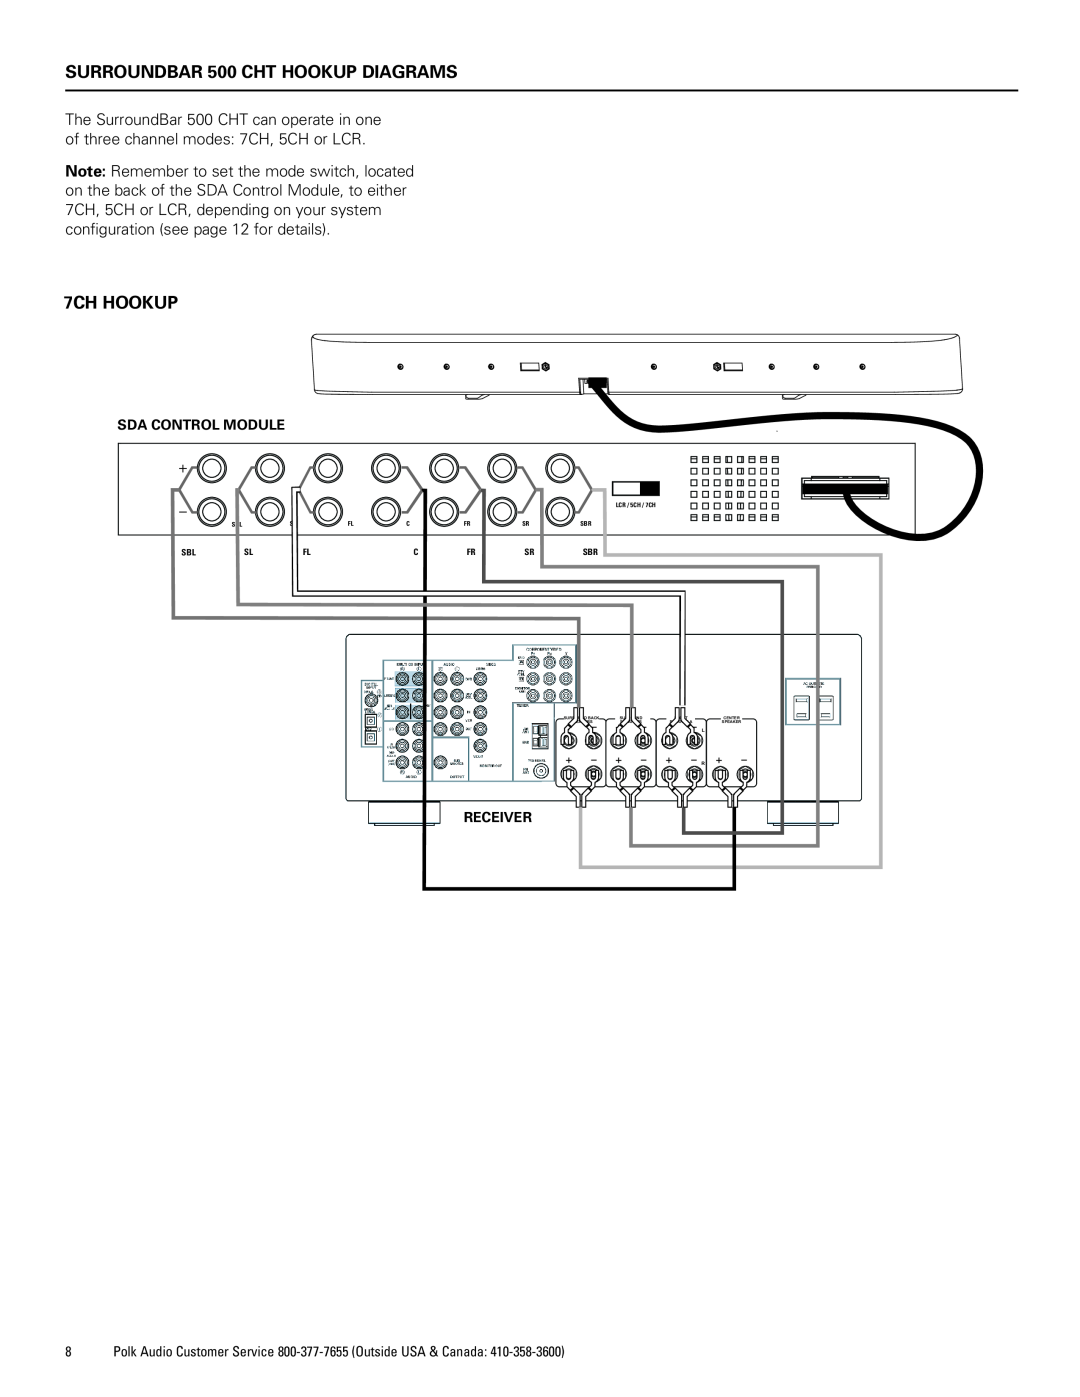 Polk Audio CHT400 manual SURROUNDBAR 500 CHT HOOKUP DIAGRAMS, 7CH HOOKUP, Sda Control Module, Receiver 